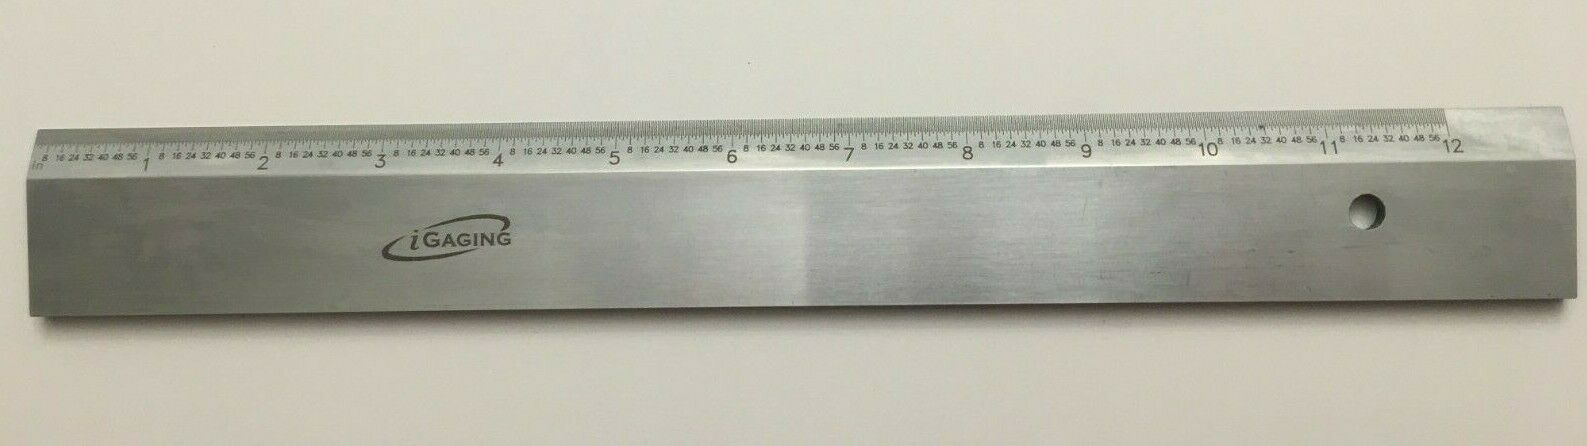 iGaging 600mm straight edge beveled precision ruler hardened steel 